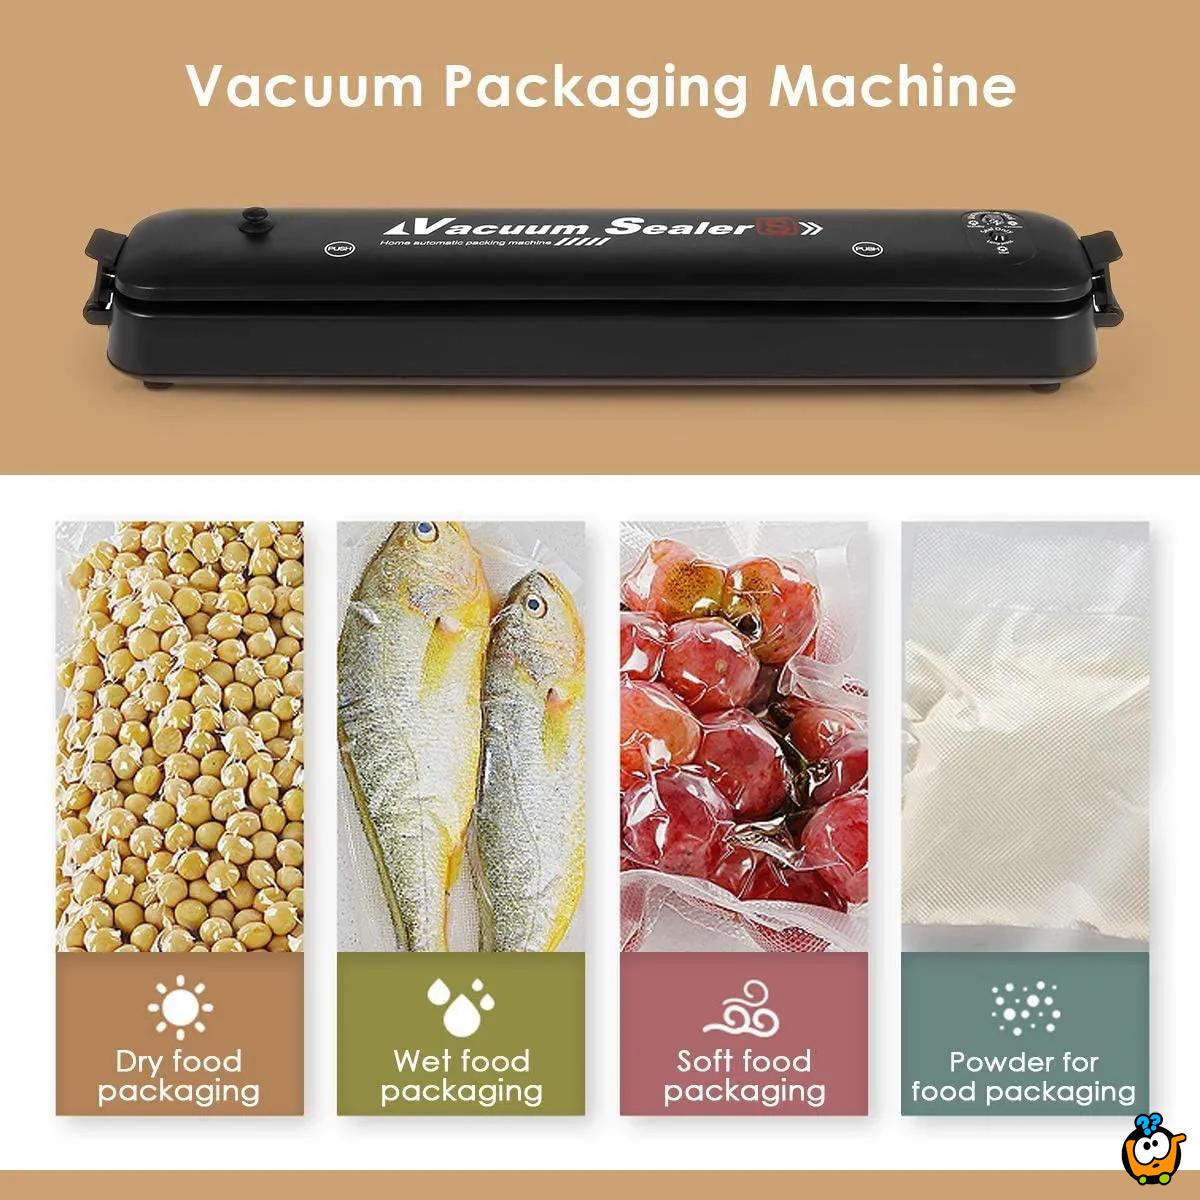 Aparat za vakumiranje hrane - Vacuum Sealer